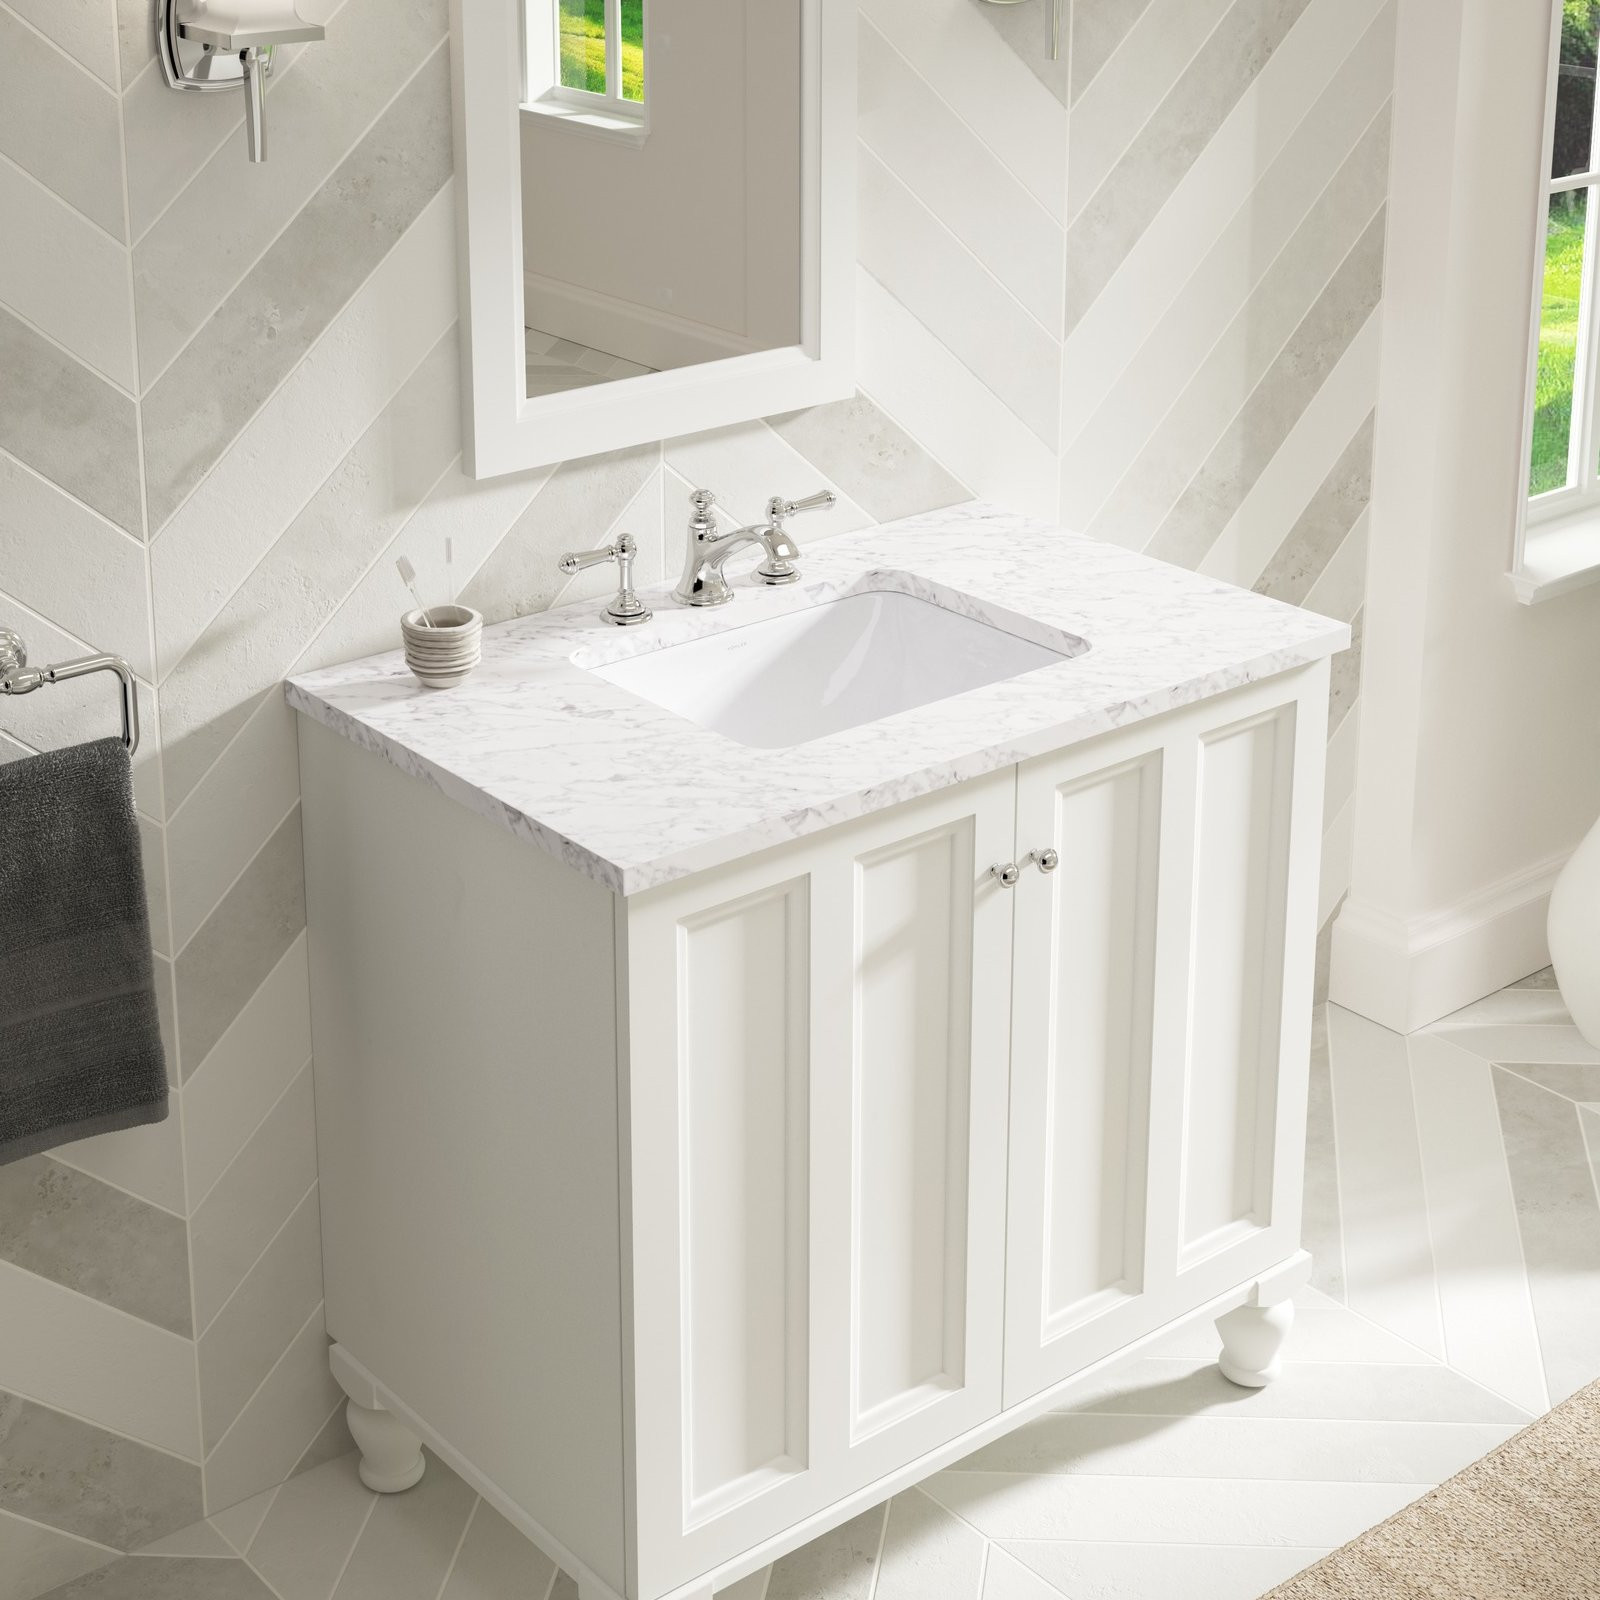 Best ideas about Undermount Bathroom Sinks
. Save or Pin Kohler Caxton Rectangle Undermount Bathroom Sink with Now.